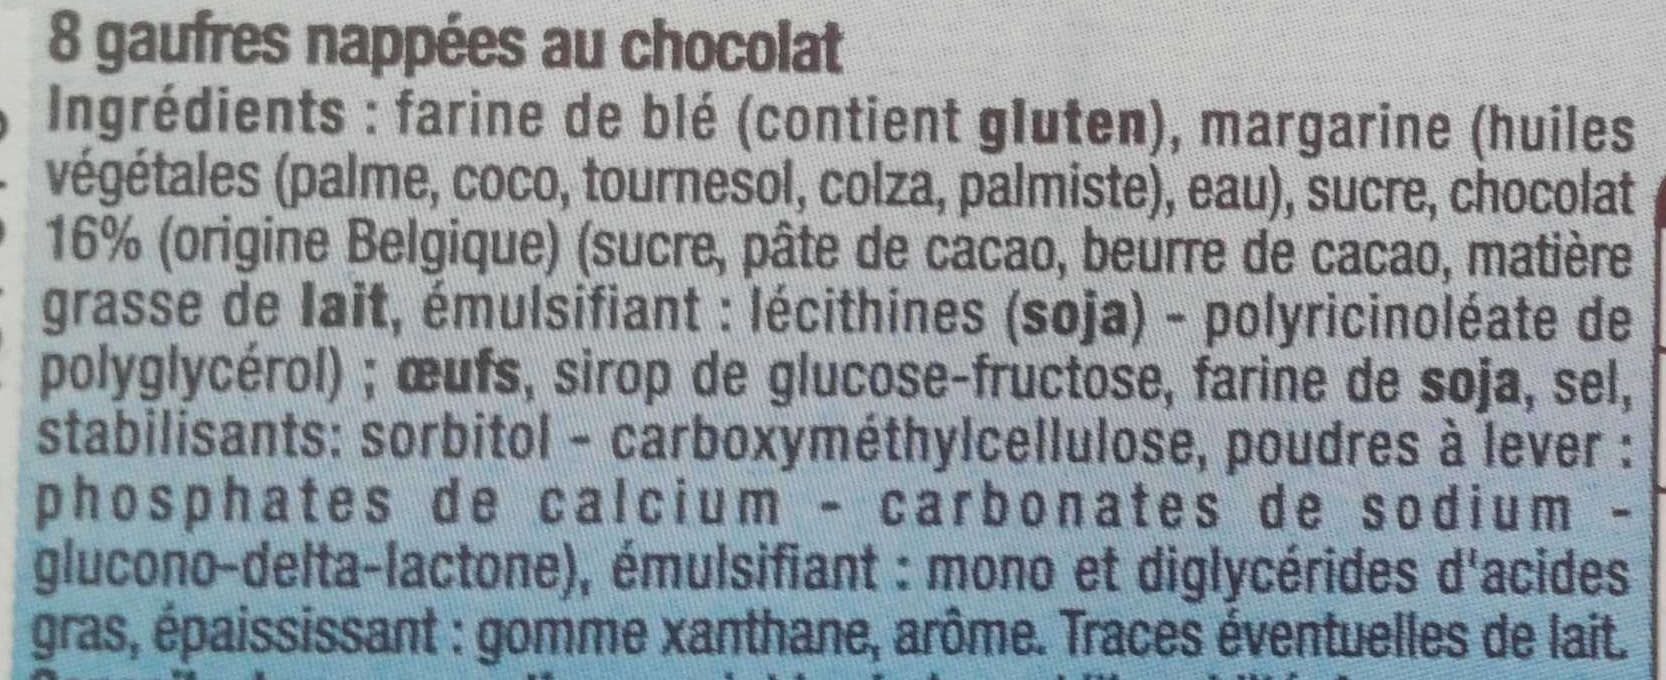 Gaufres nappées au chocolat belge - Ingredientes - fr